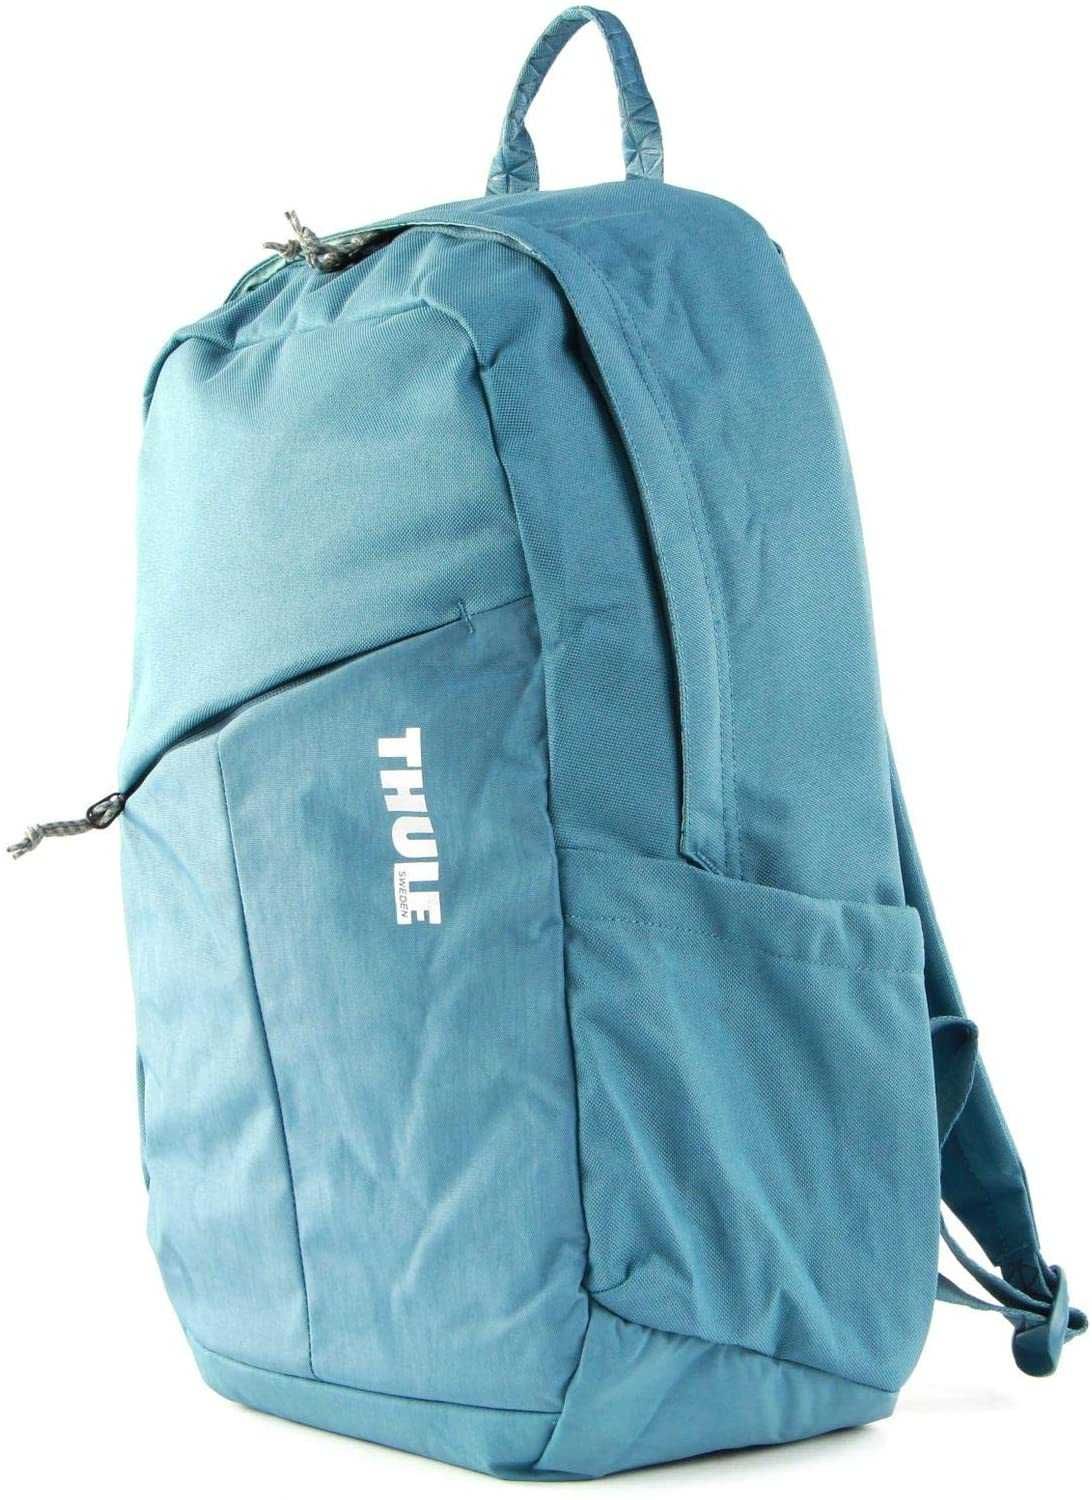 Рюкзак Thule Unisex Notus Backpack Daypack! Новый с бирками!